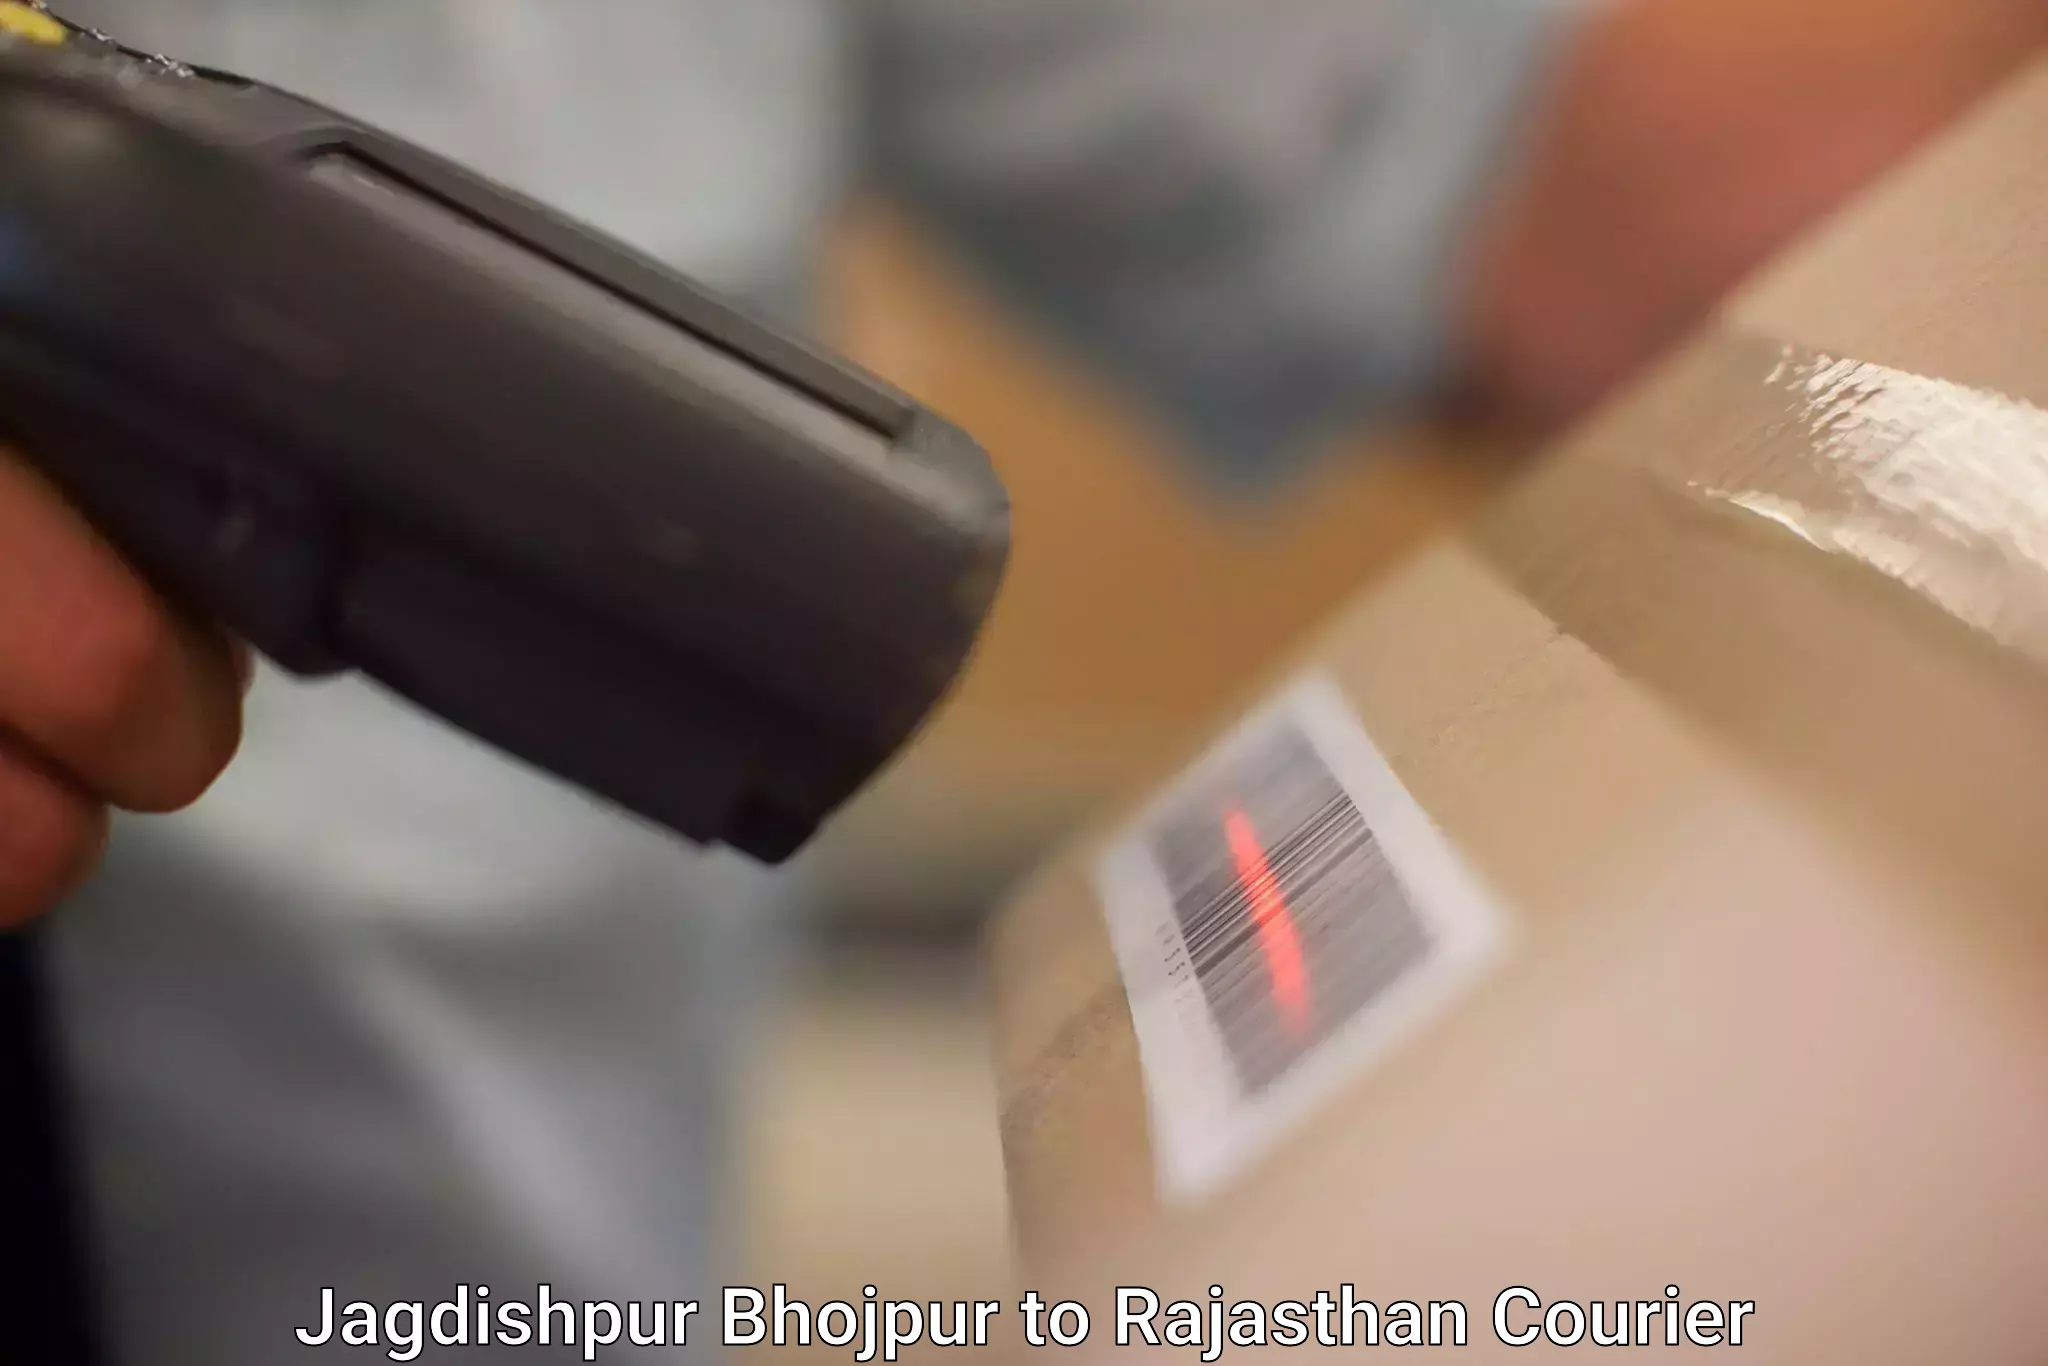 Professional courier handling Jagdishpur Bhojpur to Tonk